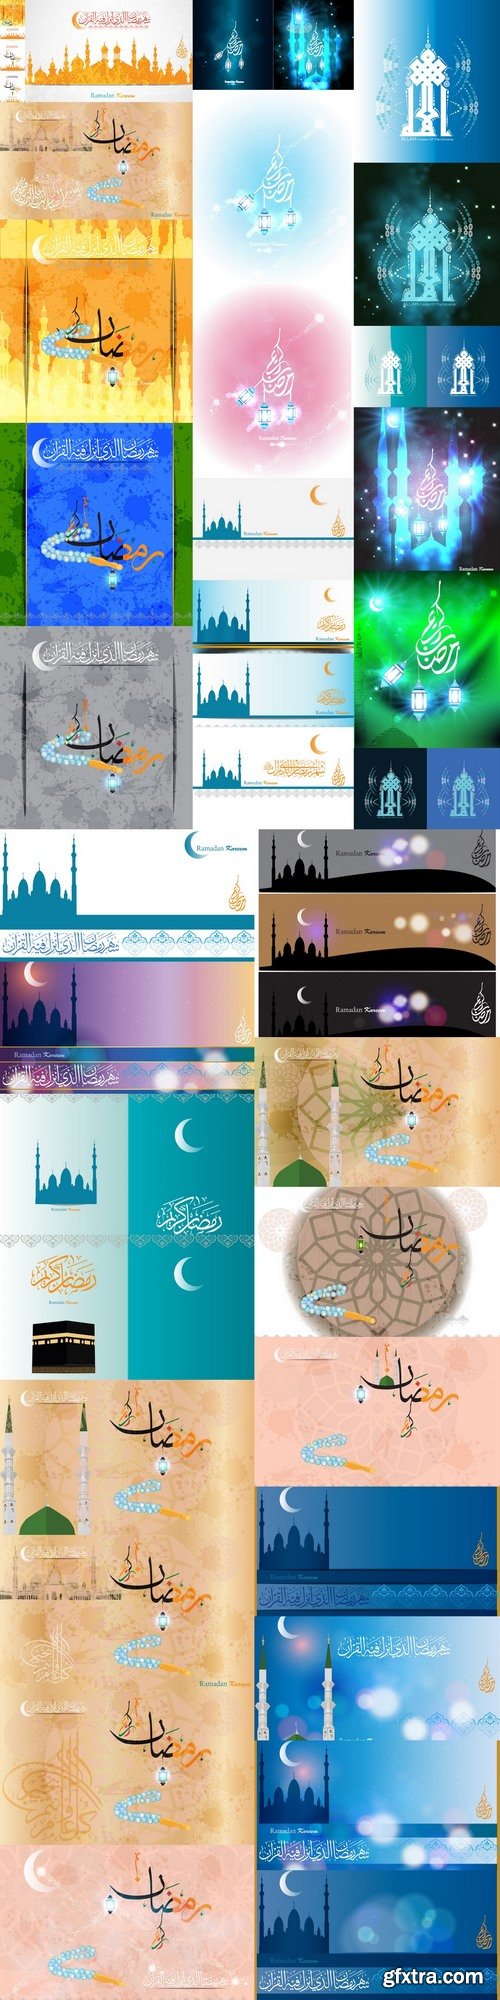 Muslim graphics